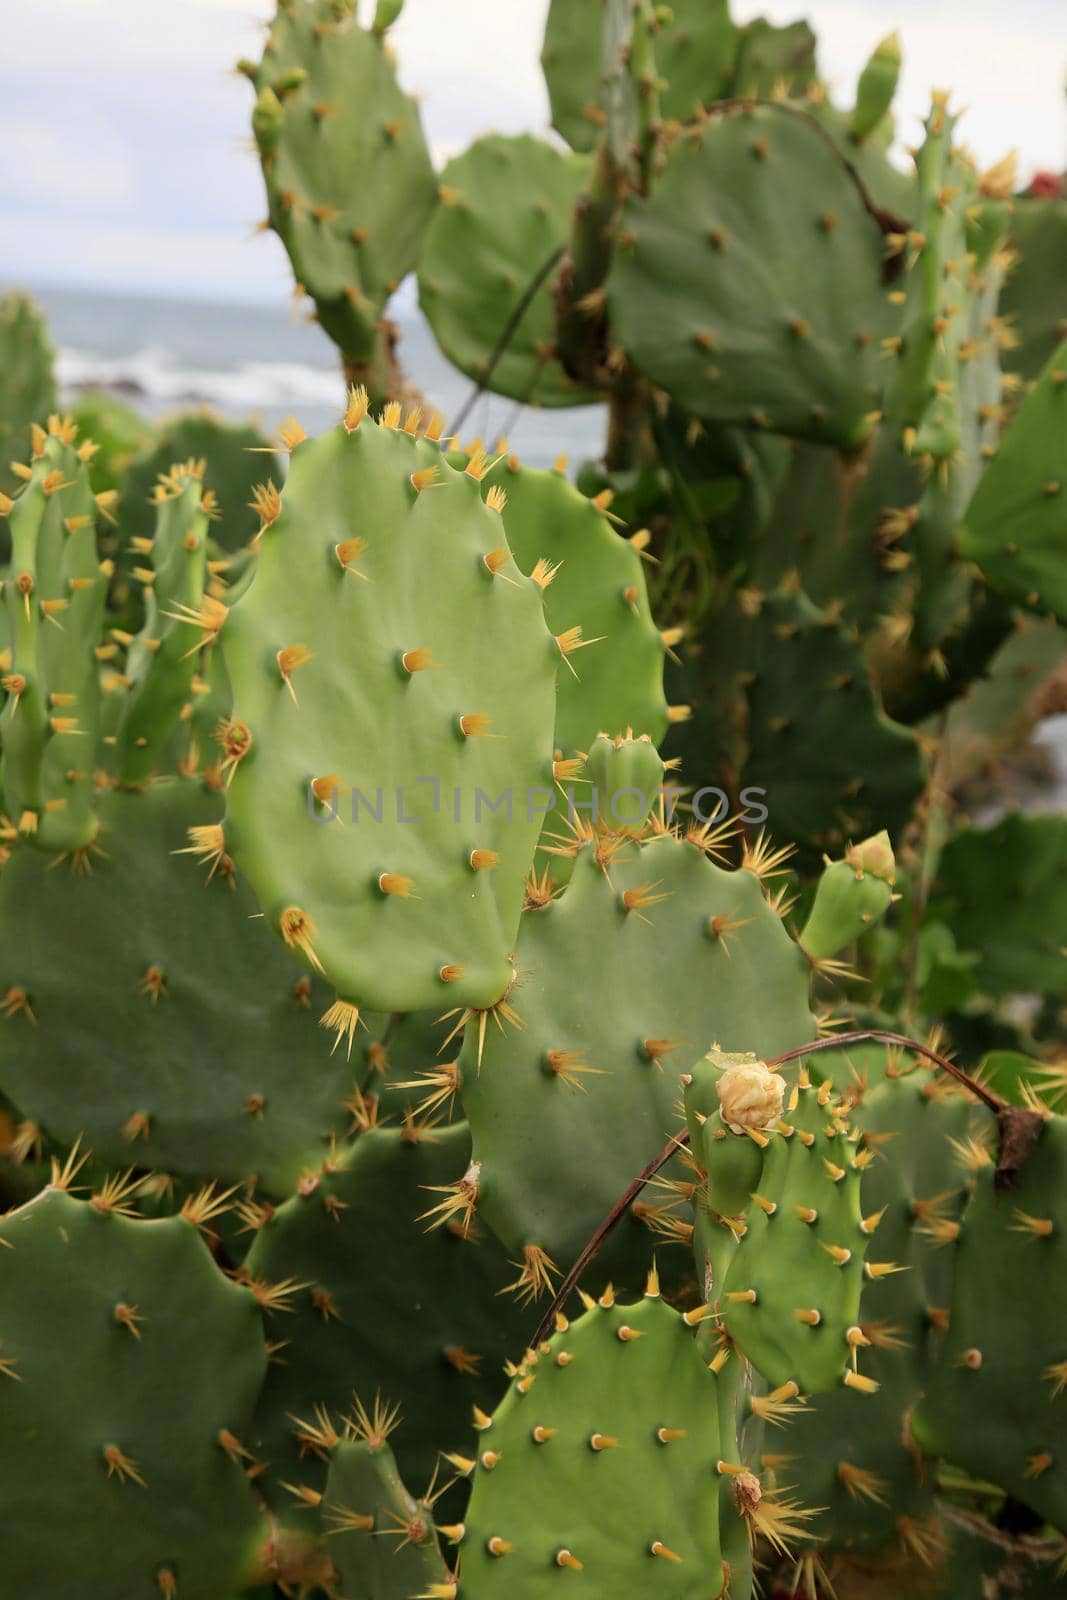 thorns on cactus plant by joasouza